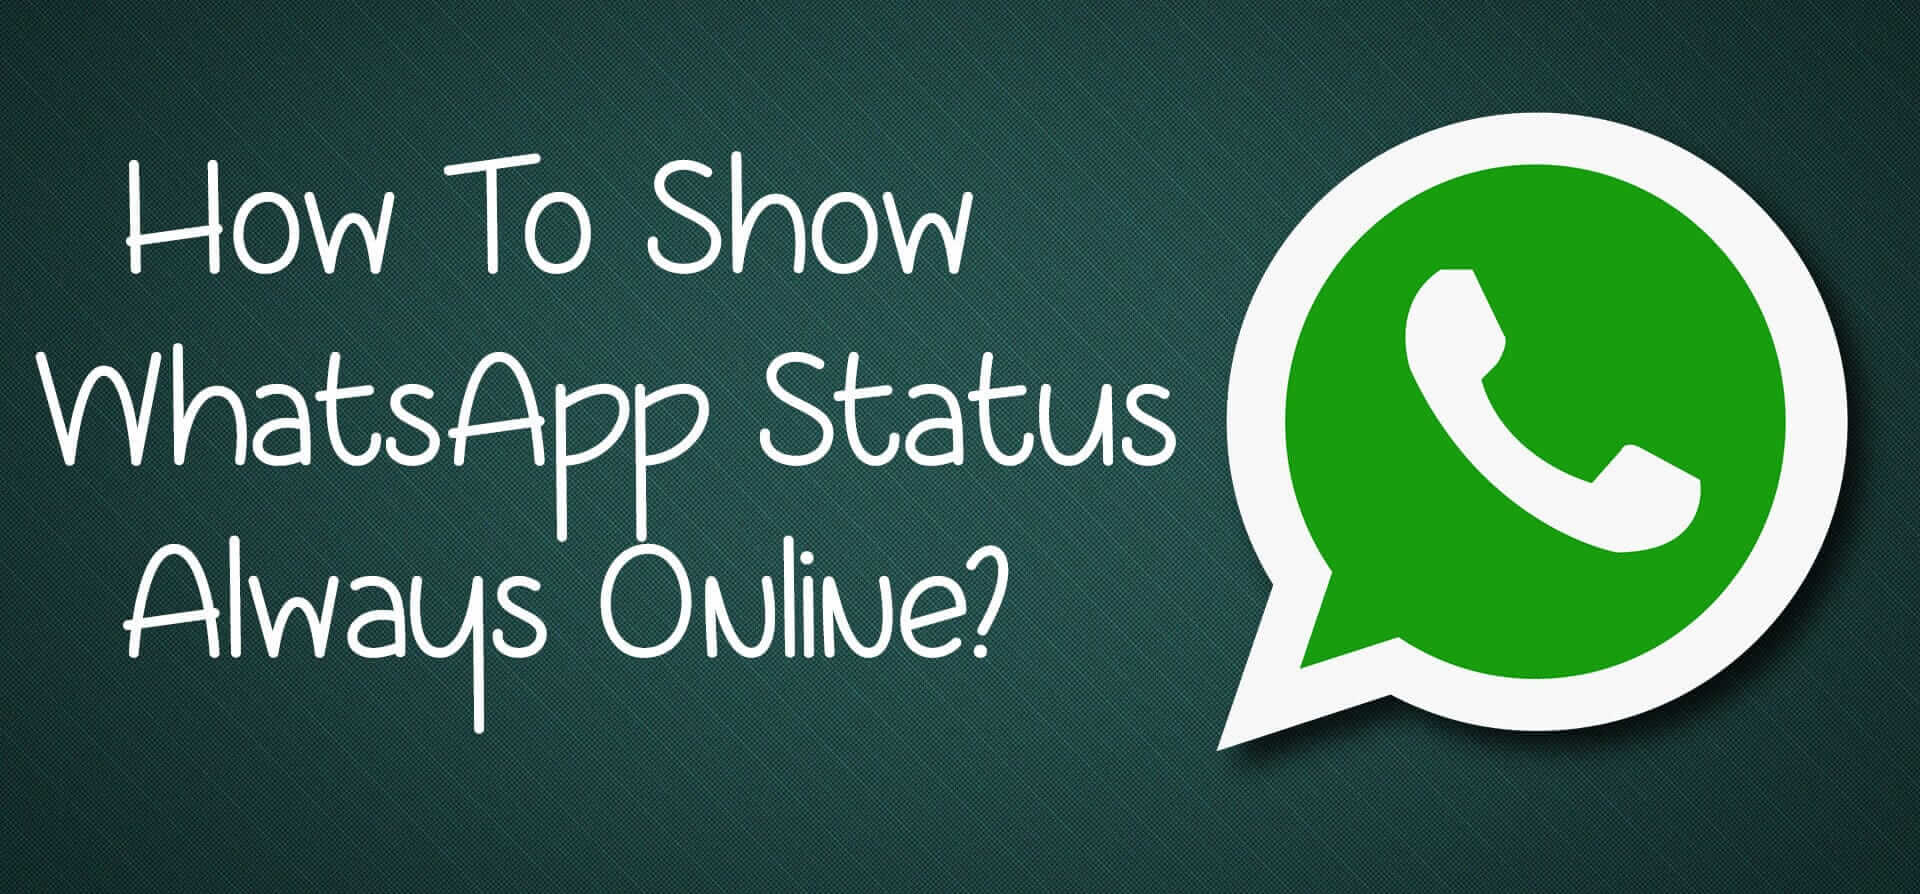 mostrar status do WhatsApp sempre online